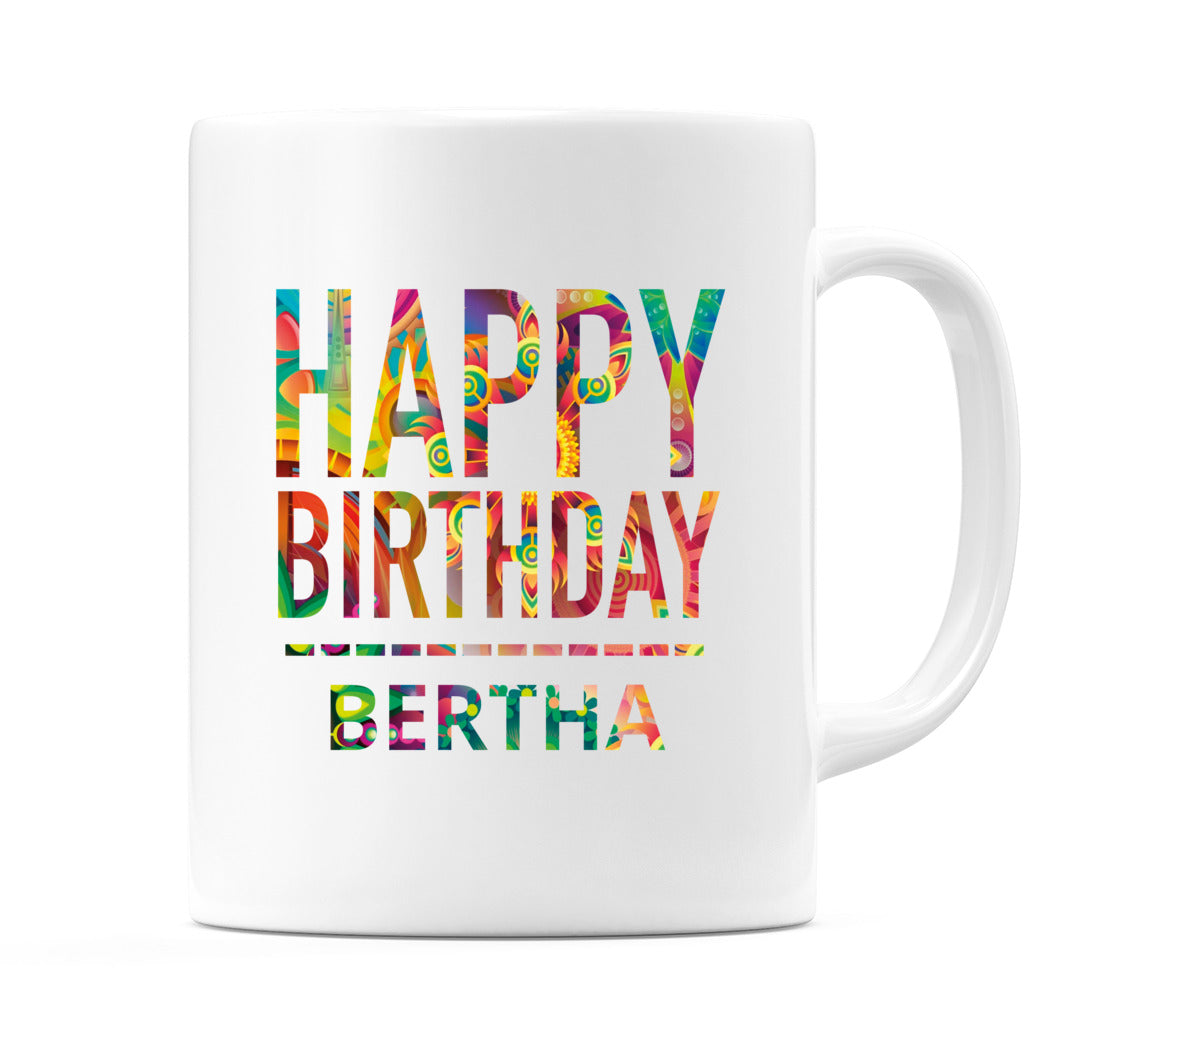 Happy Birthday Bertha (Tie Dye Effect) Mug Cup by WeDoMugs